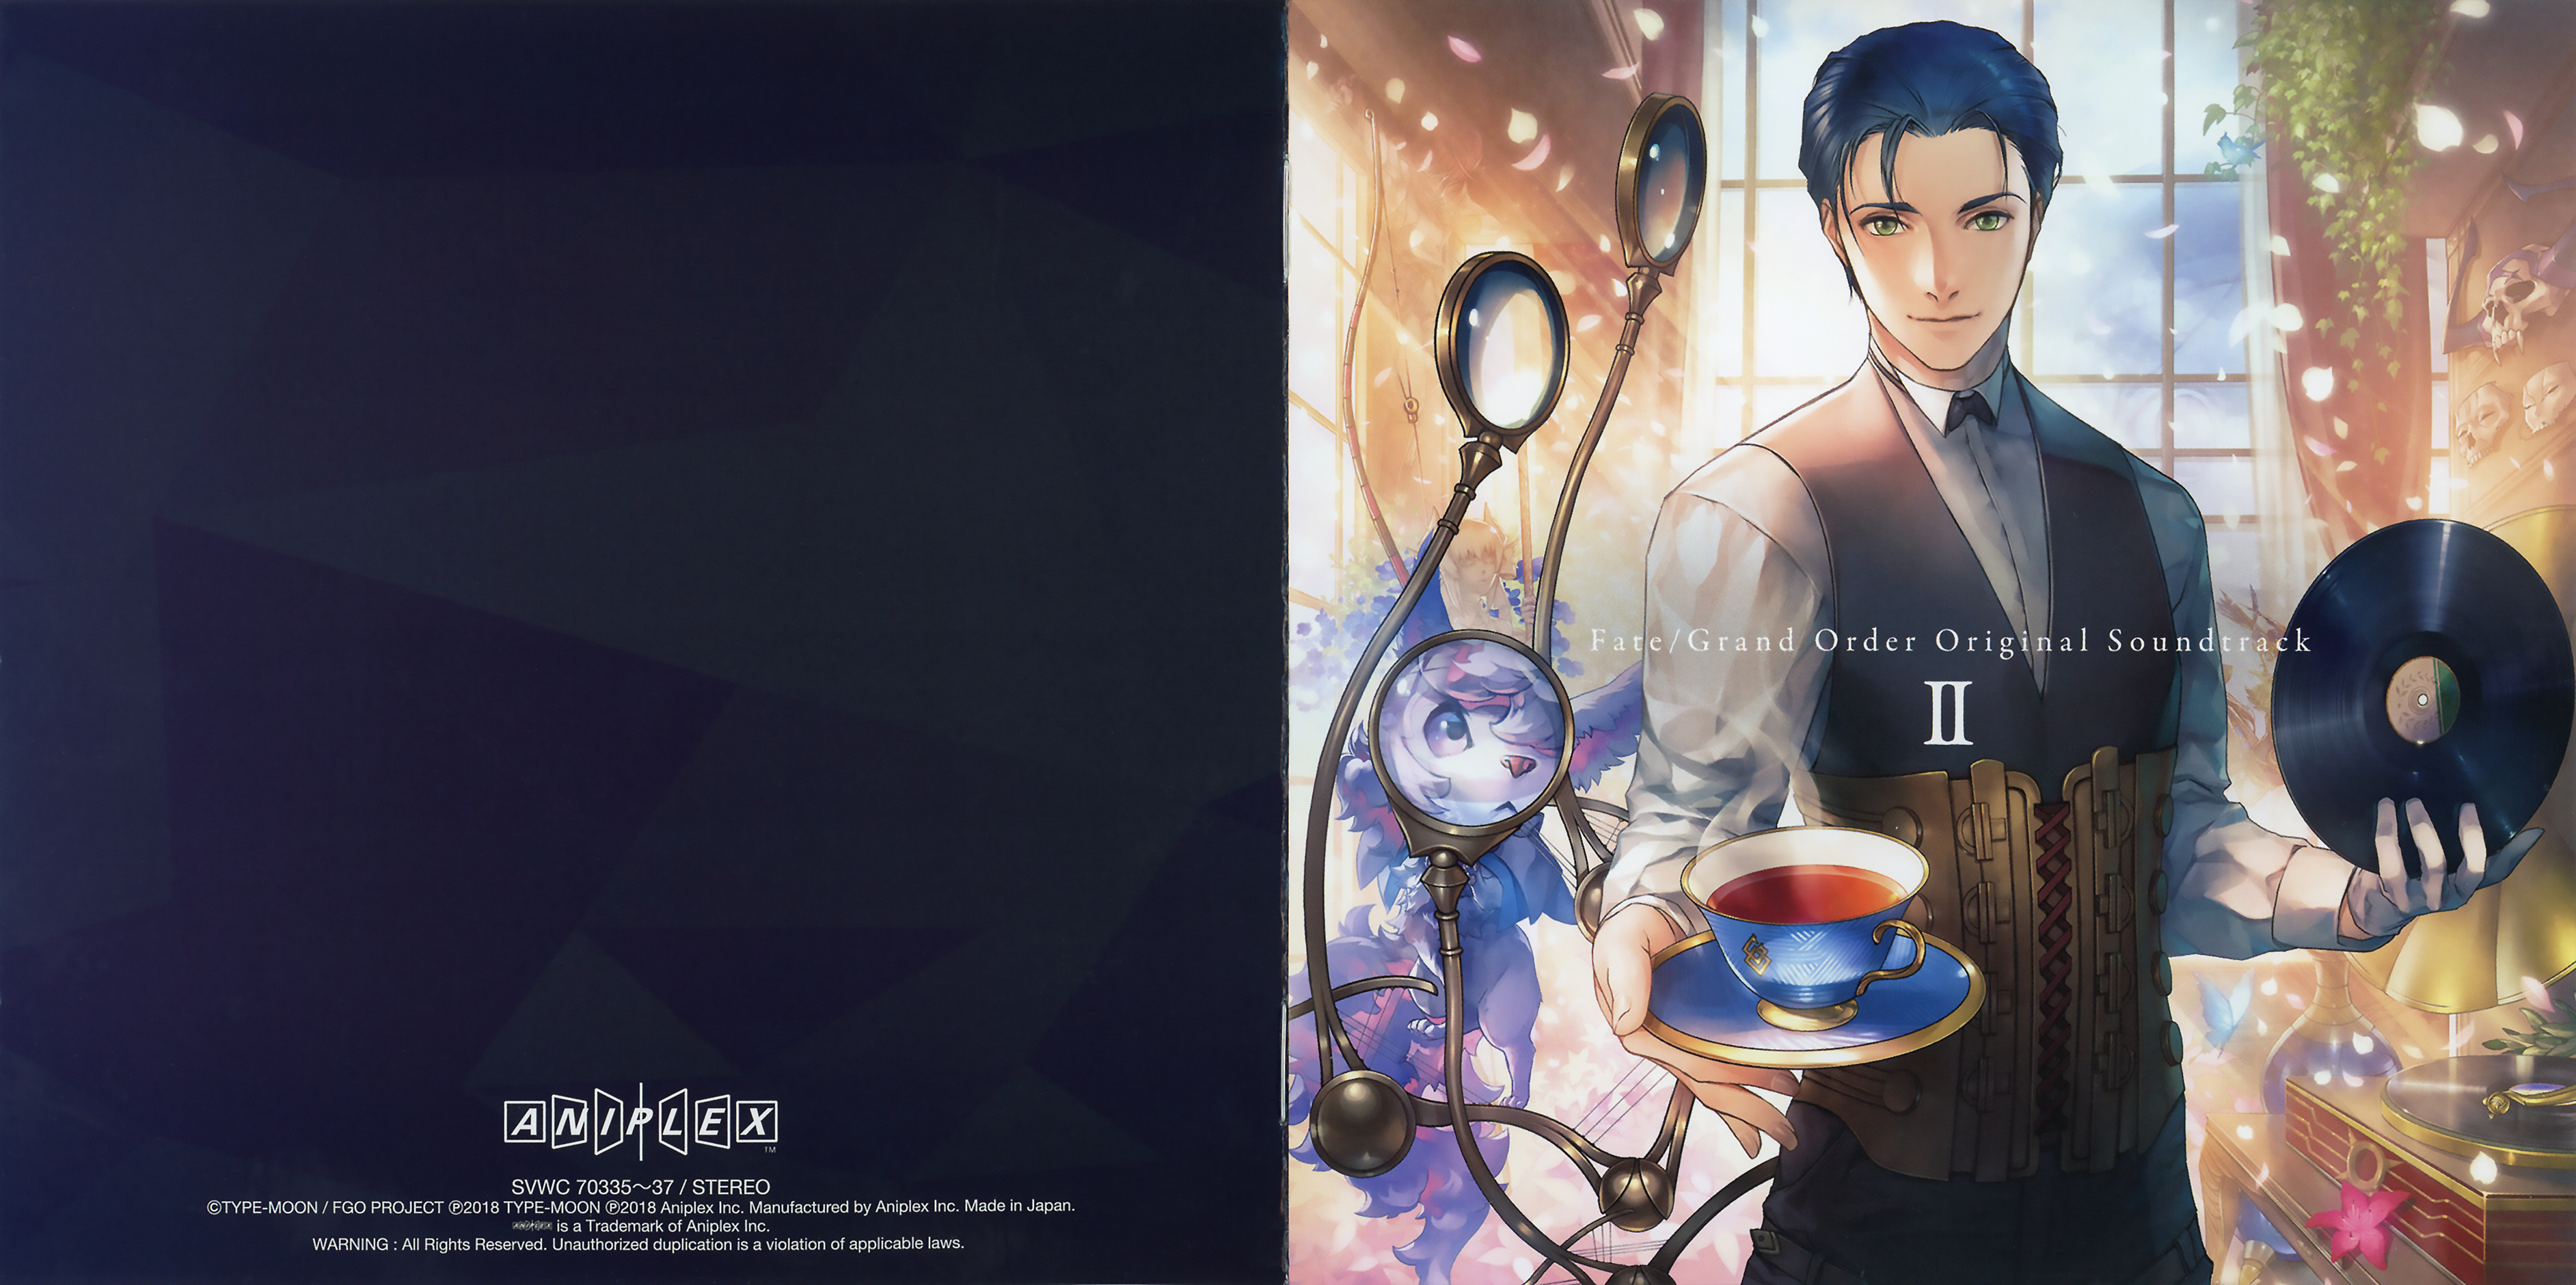 Fate Grand Order Original Soundtrack Ii Mp3 Download Fate Grand Order Original Soundtrack Ii Soundtracks For Free